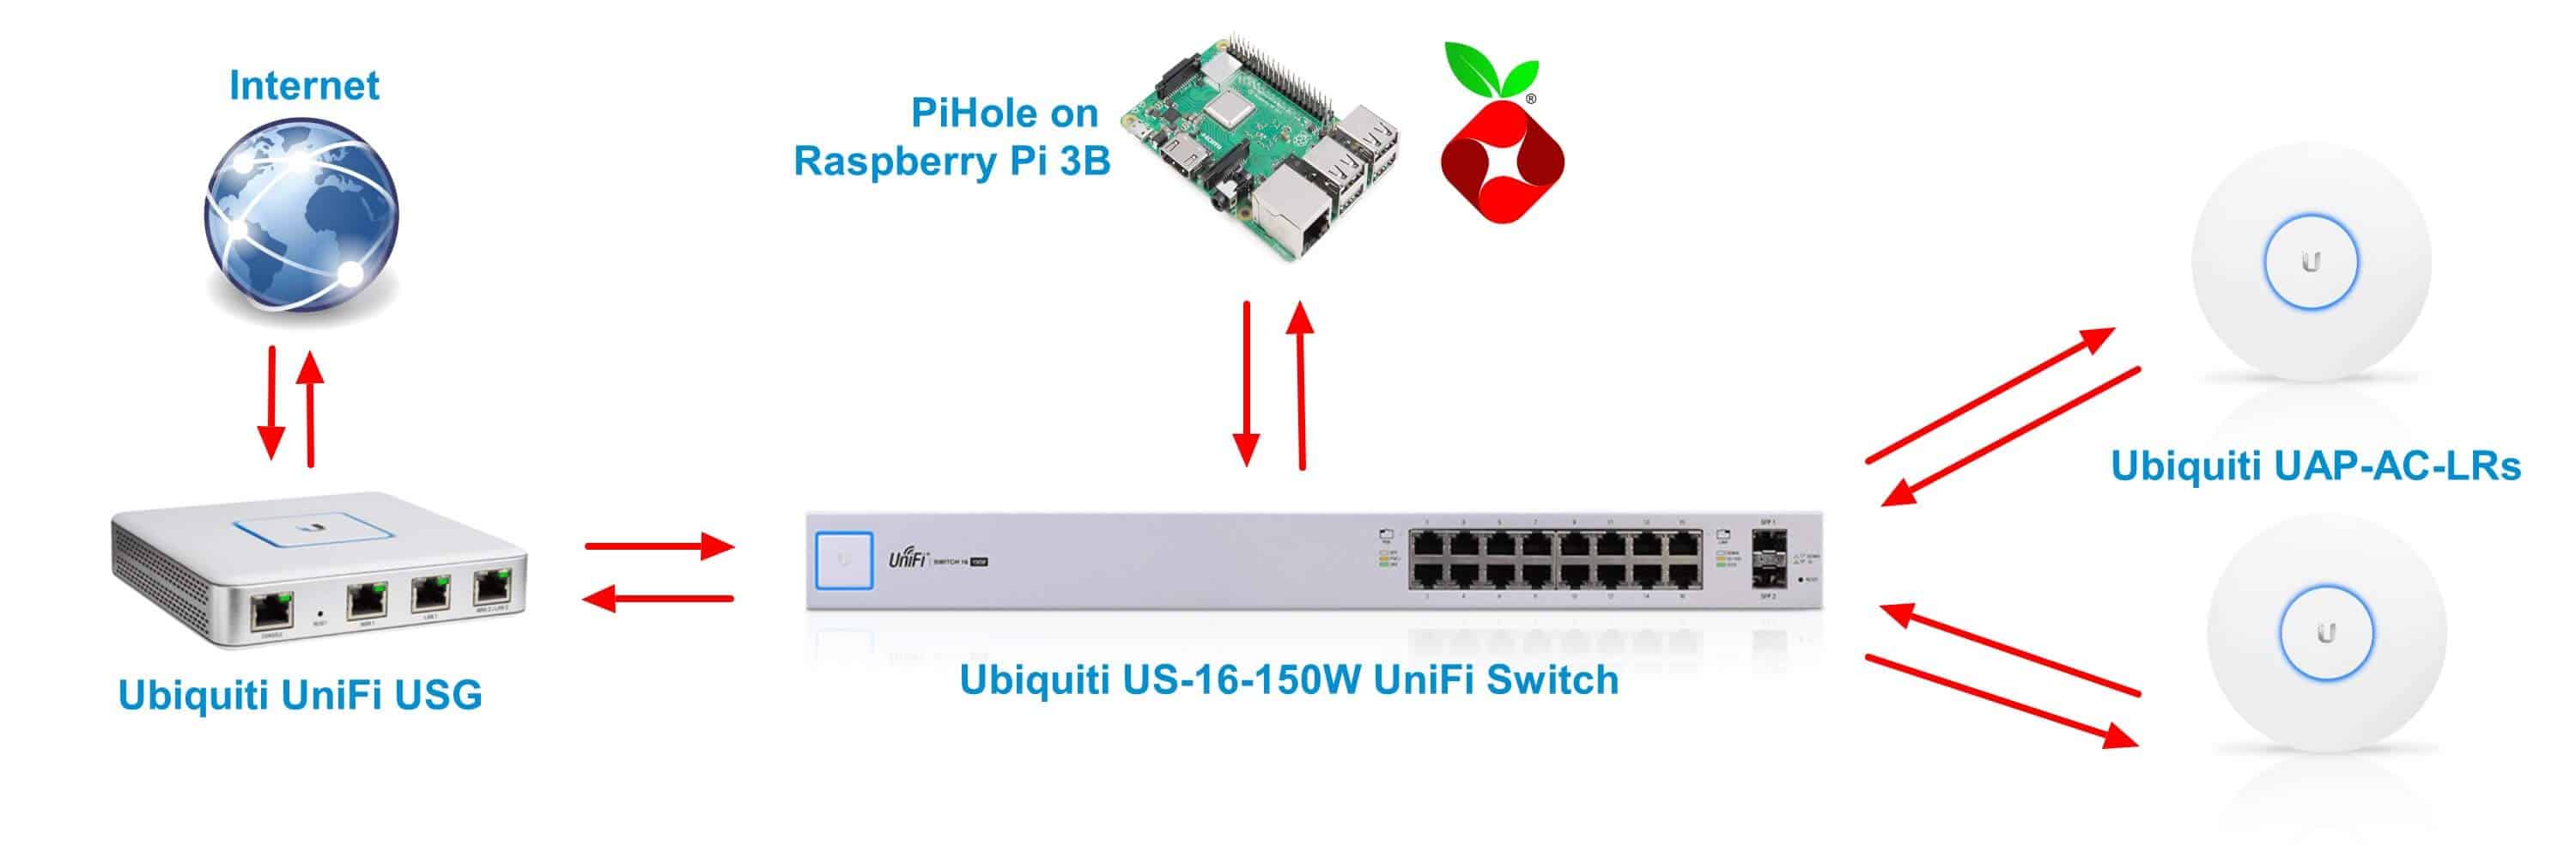 unifi controller on raspberry pi